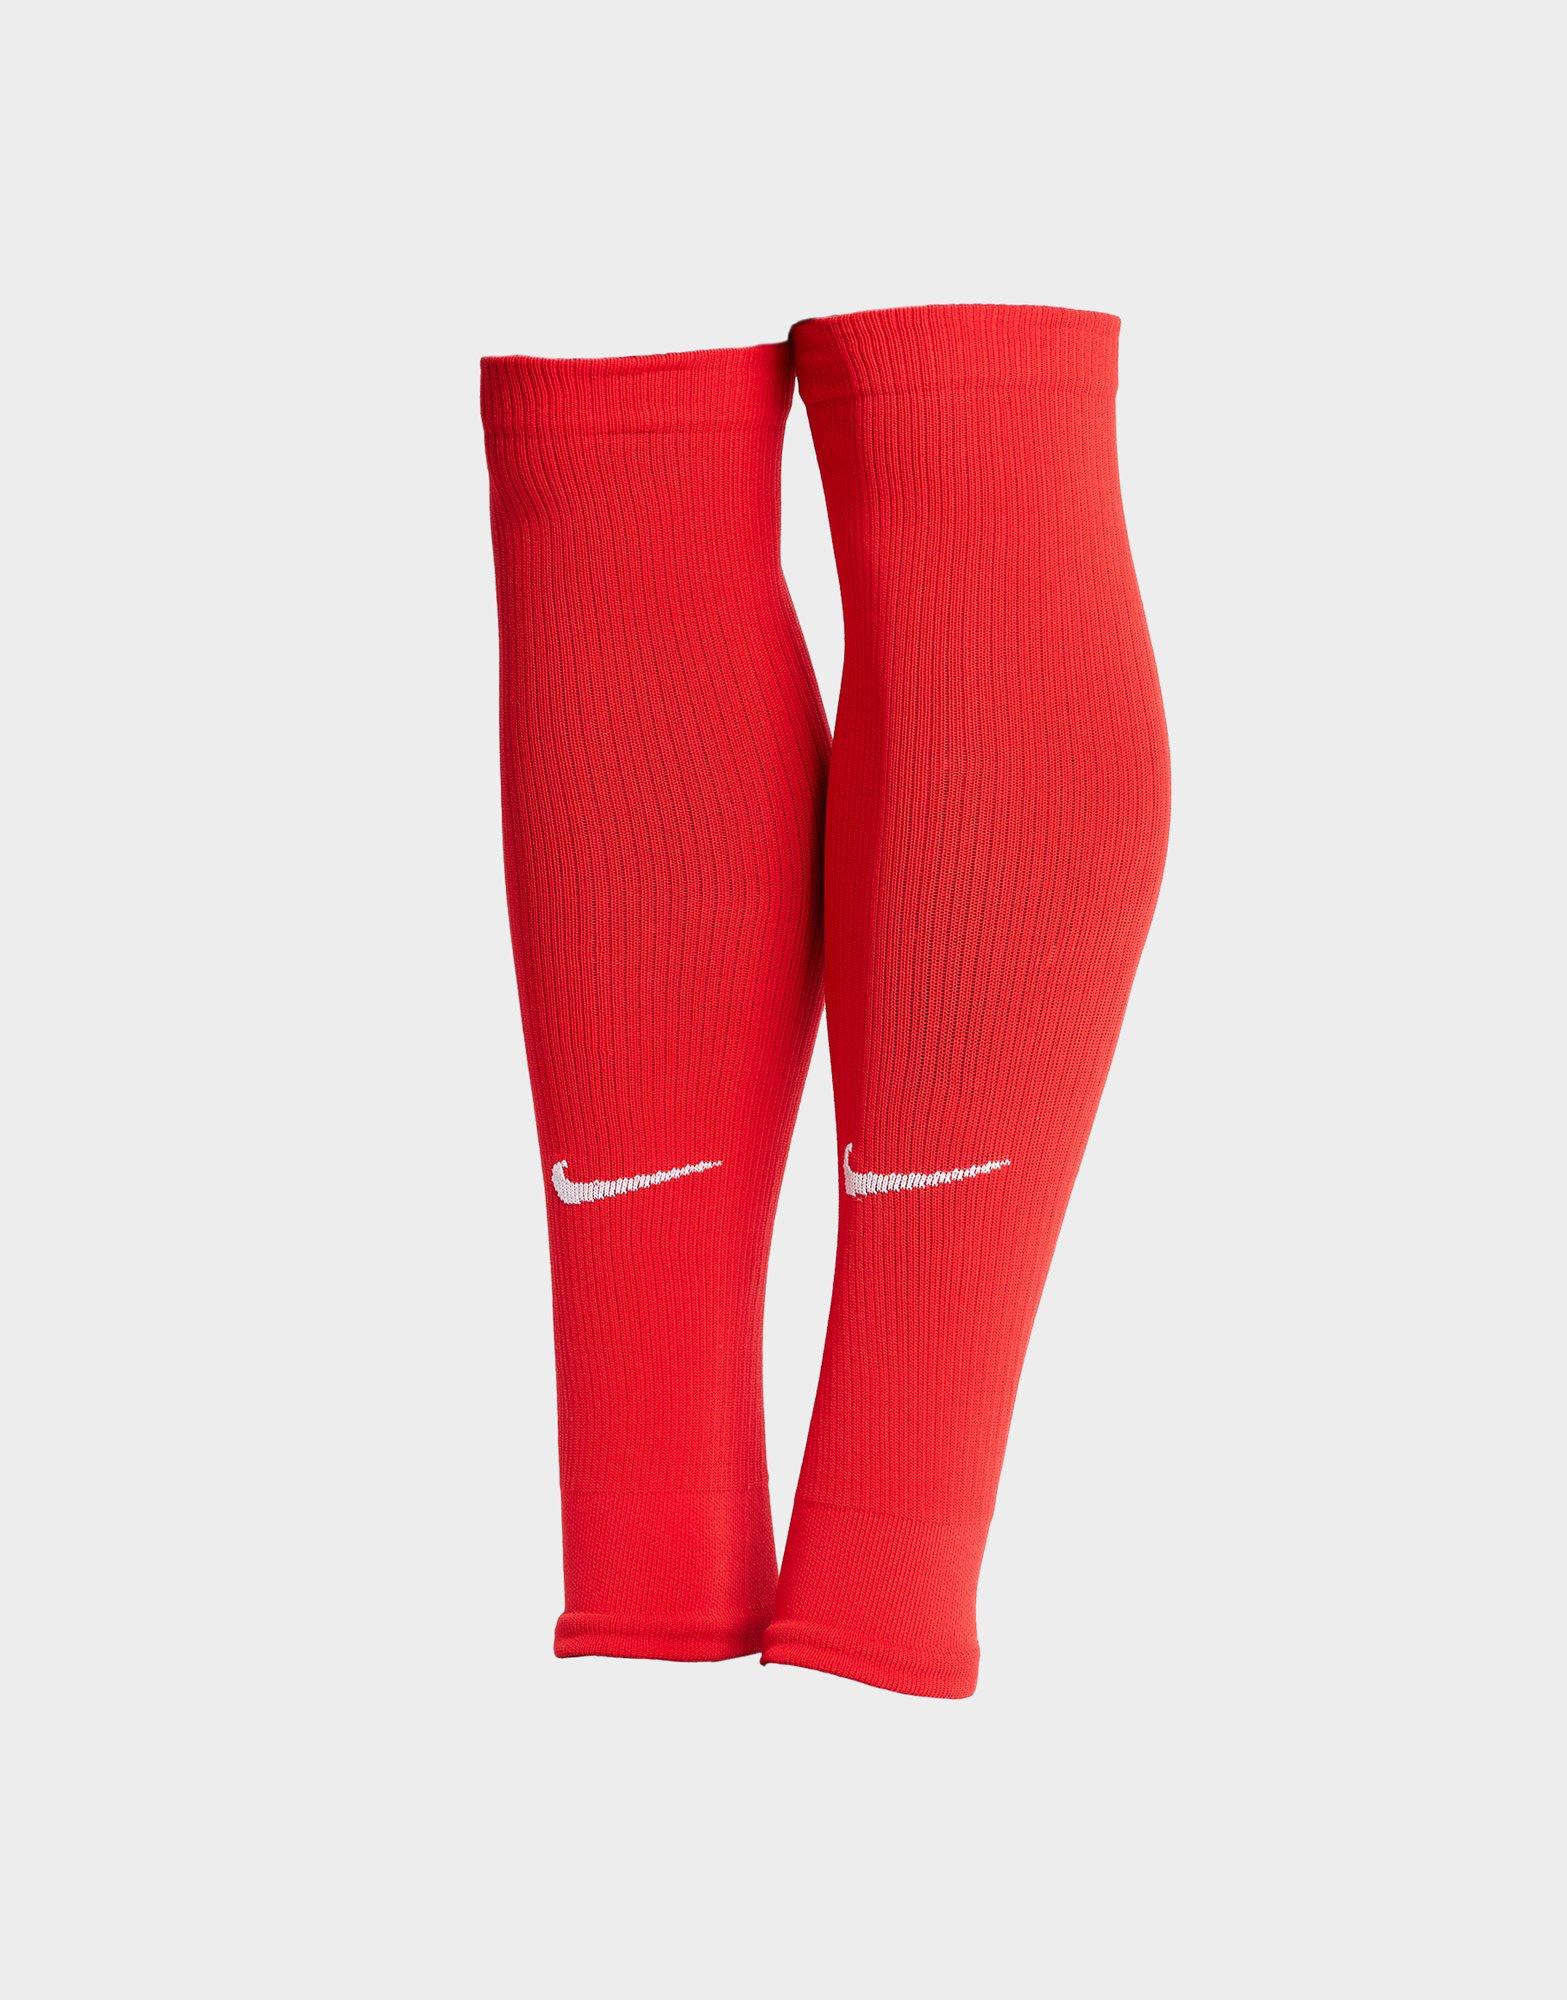 Nike Football Leg Sleeves Review 